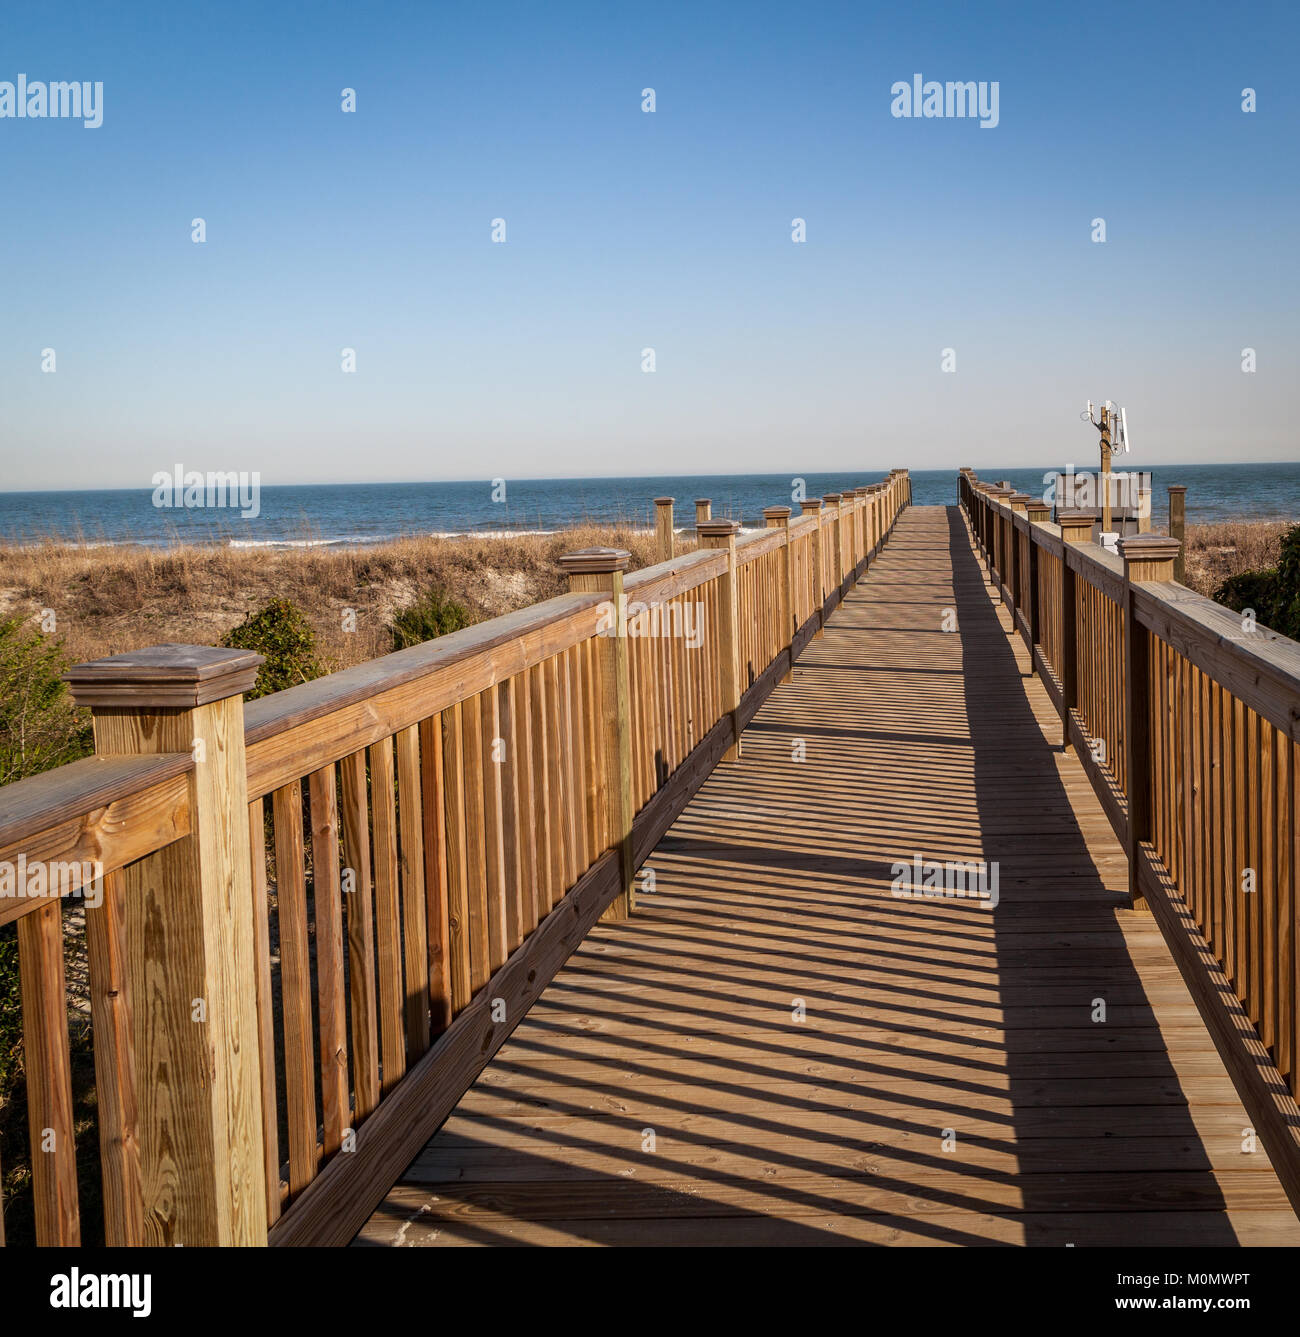 Board walk to the beach in Mytle Beach, South Carolina. Stock Photo